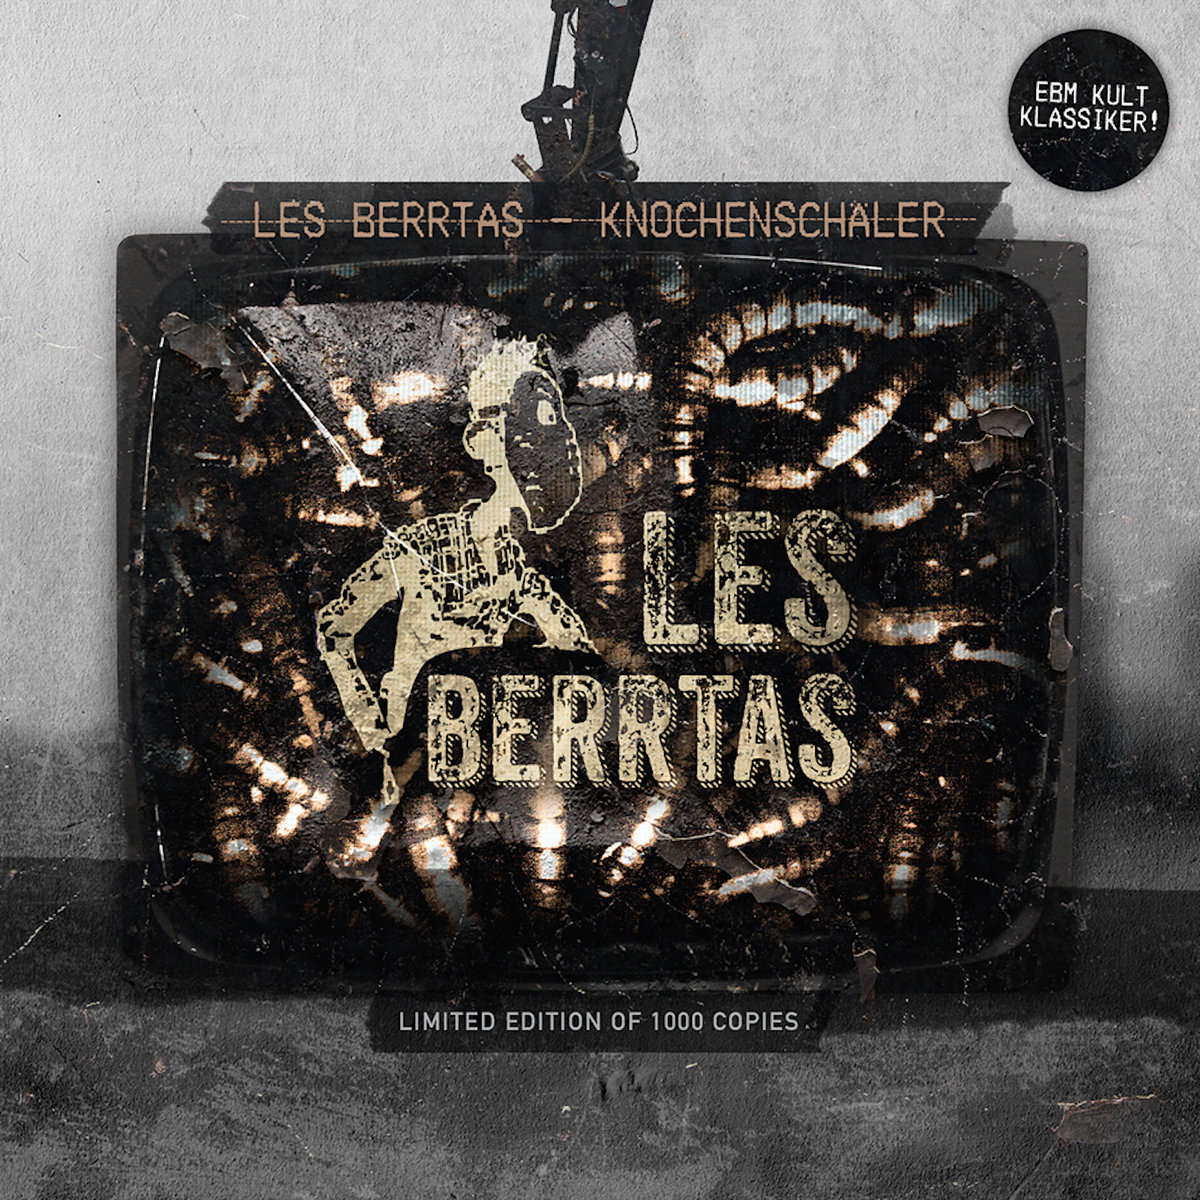 Les Berrtas - Knochenschäler CD